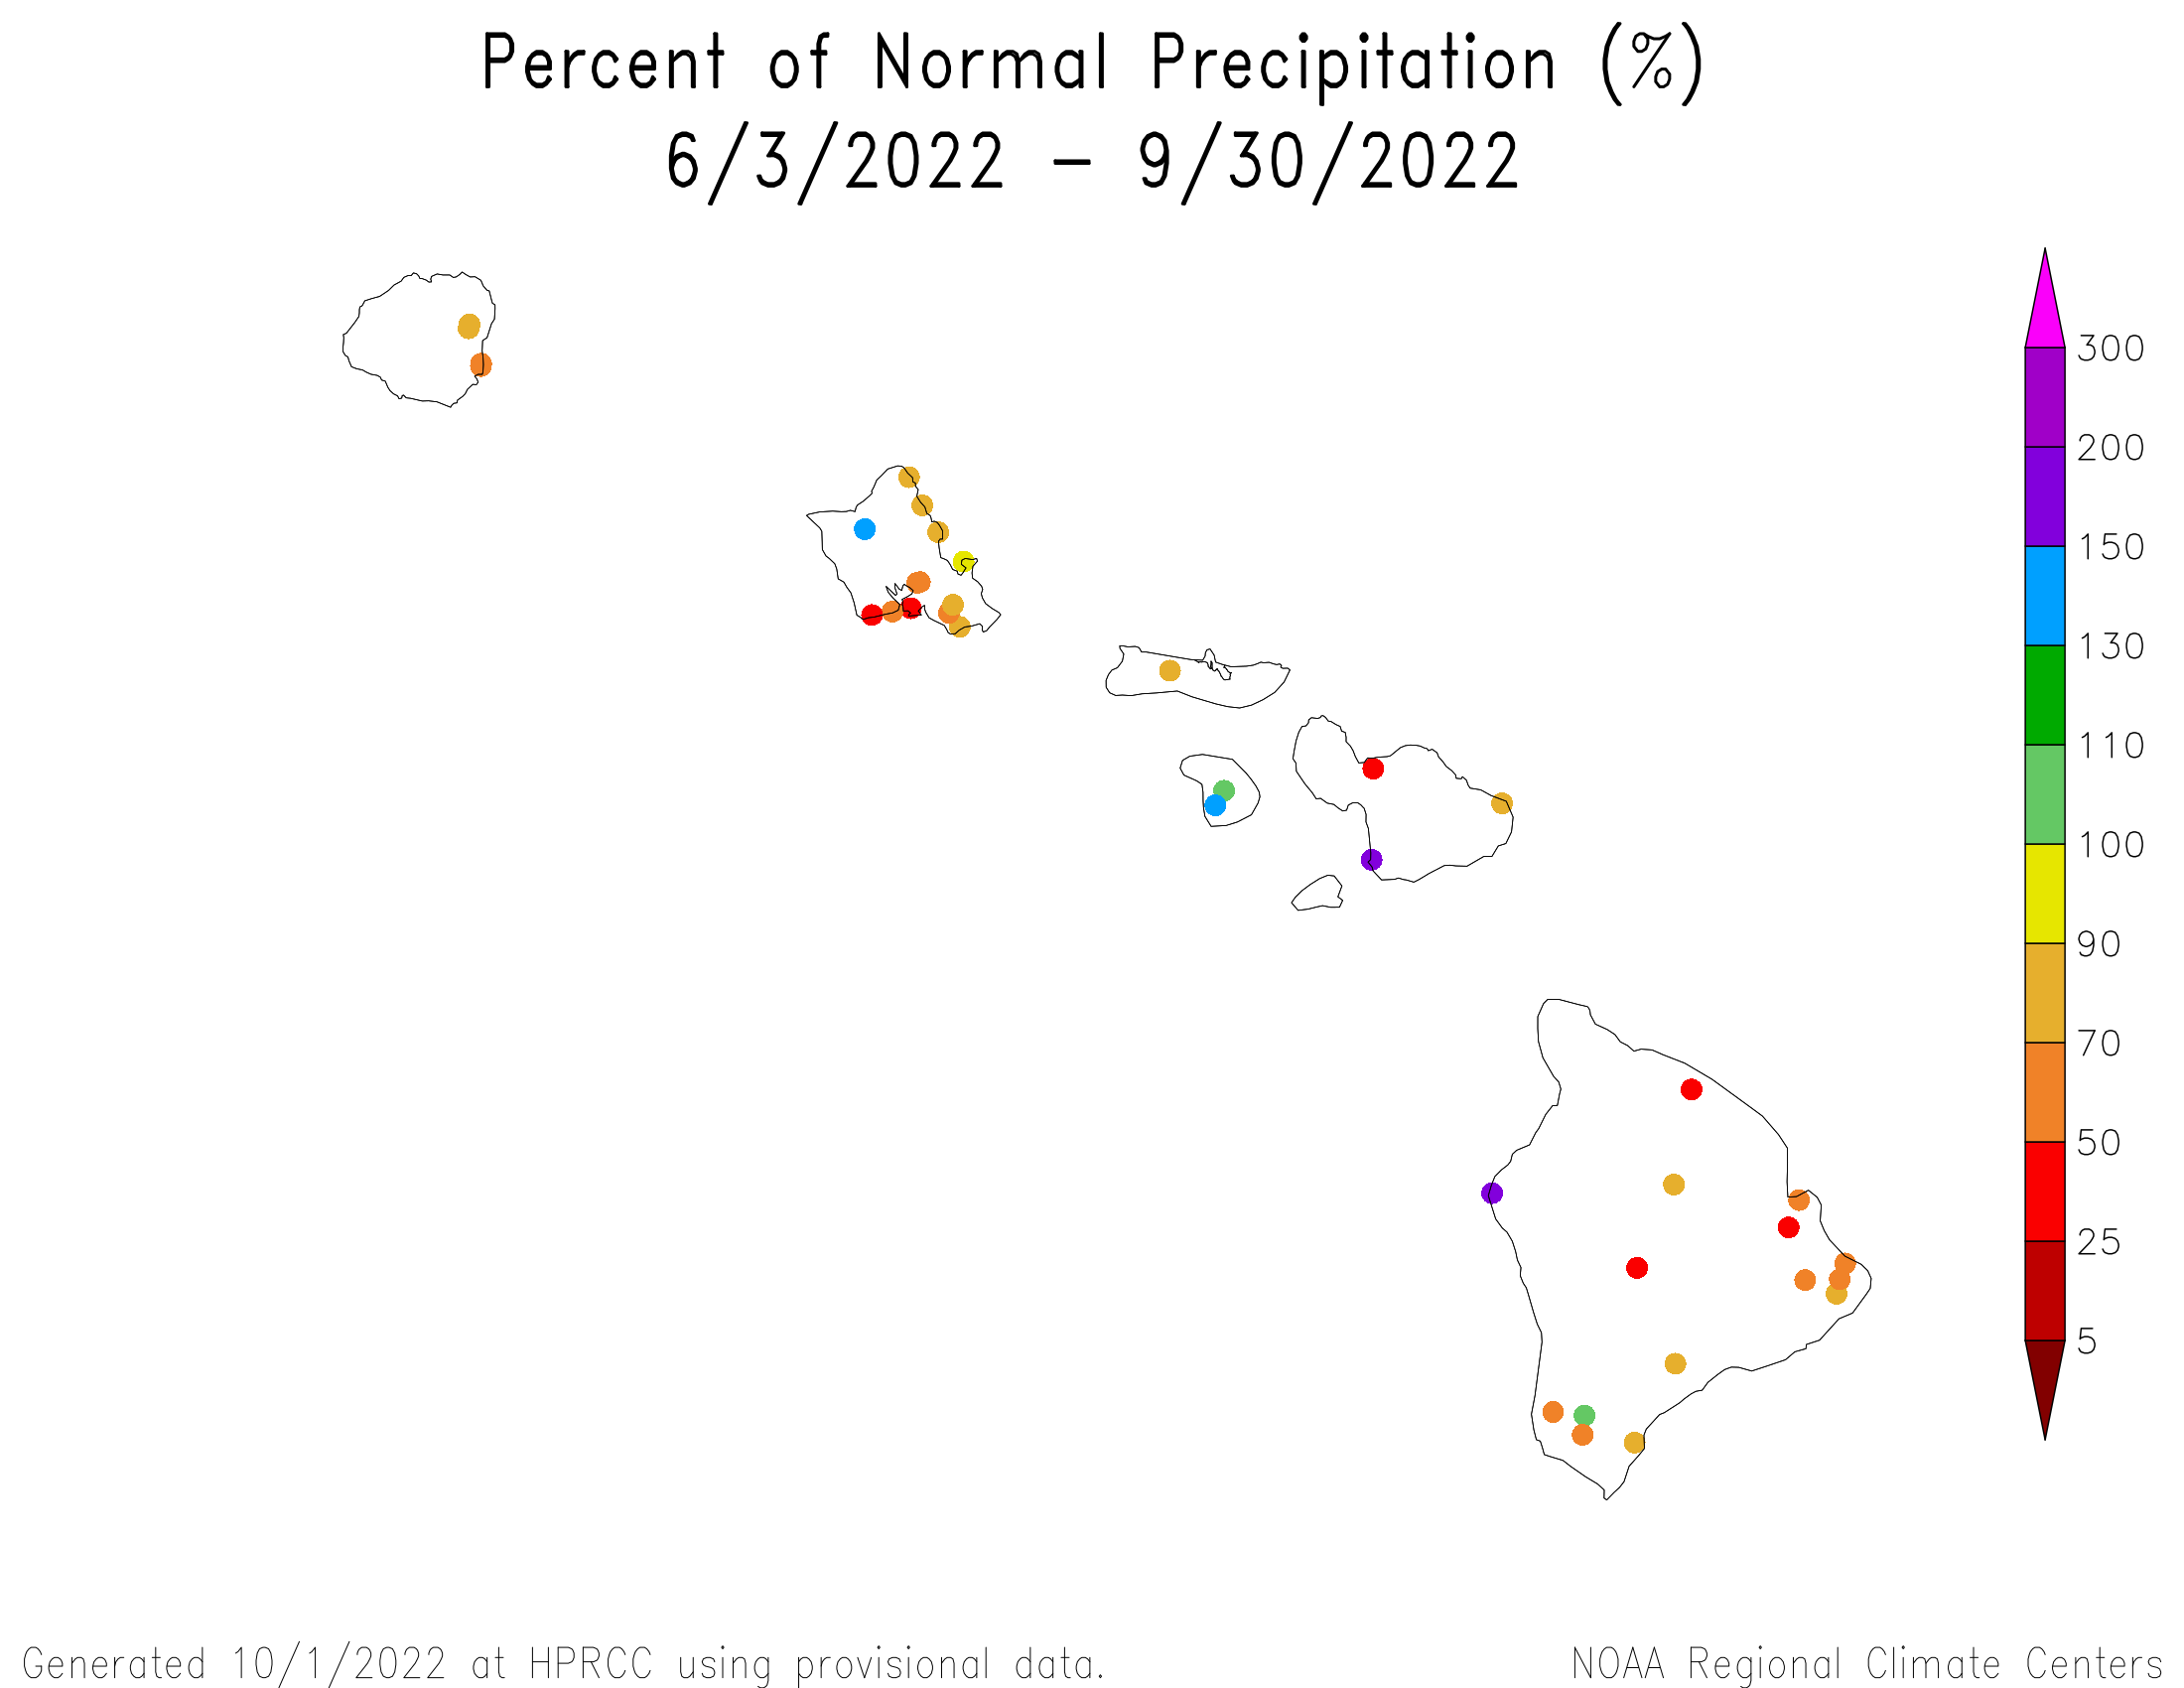 Hawaii Percent of Normal Precipitation, June-September 2022